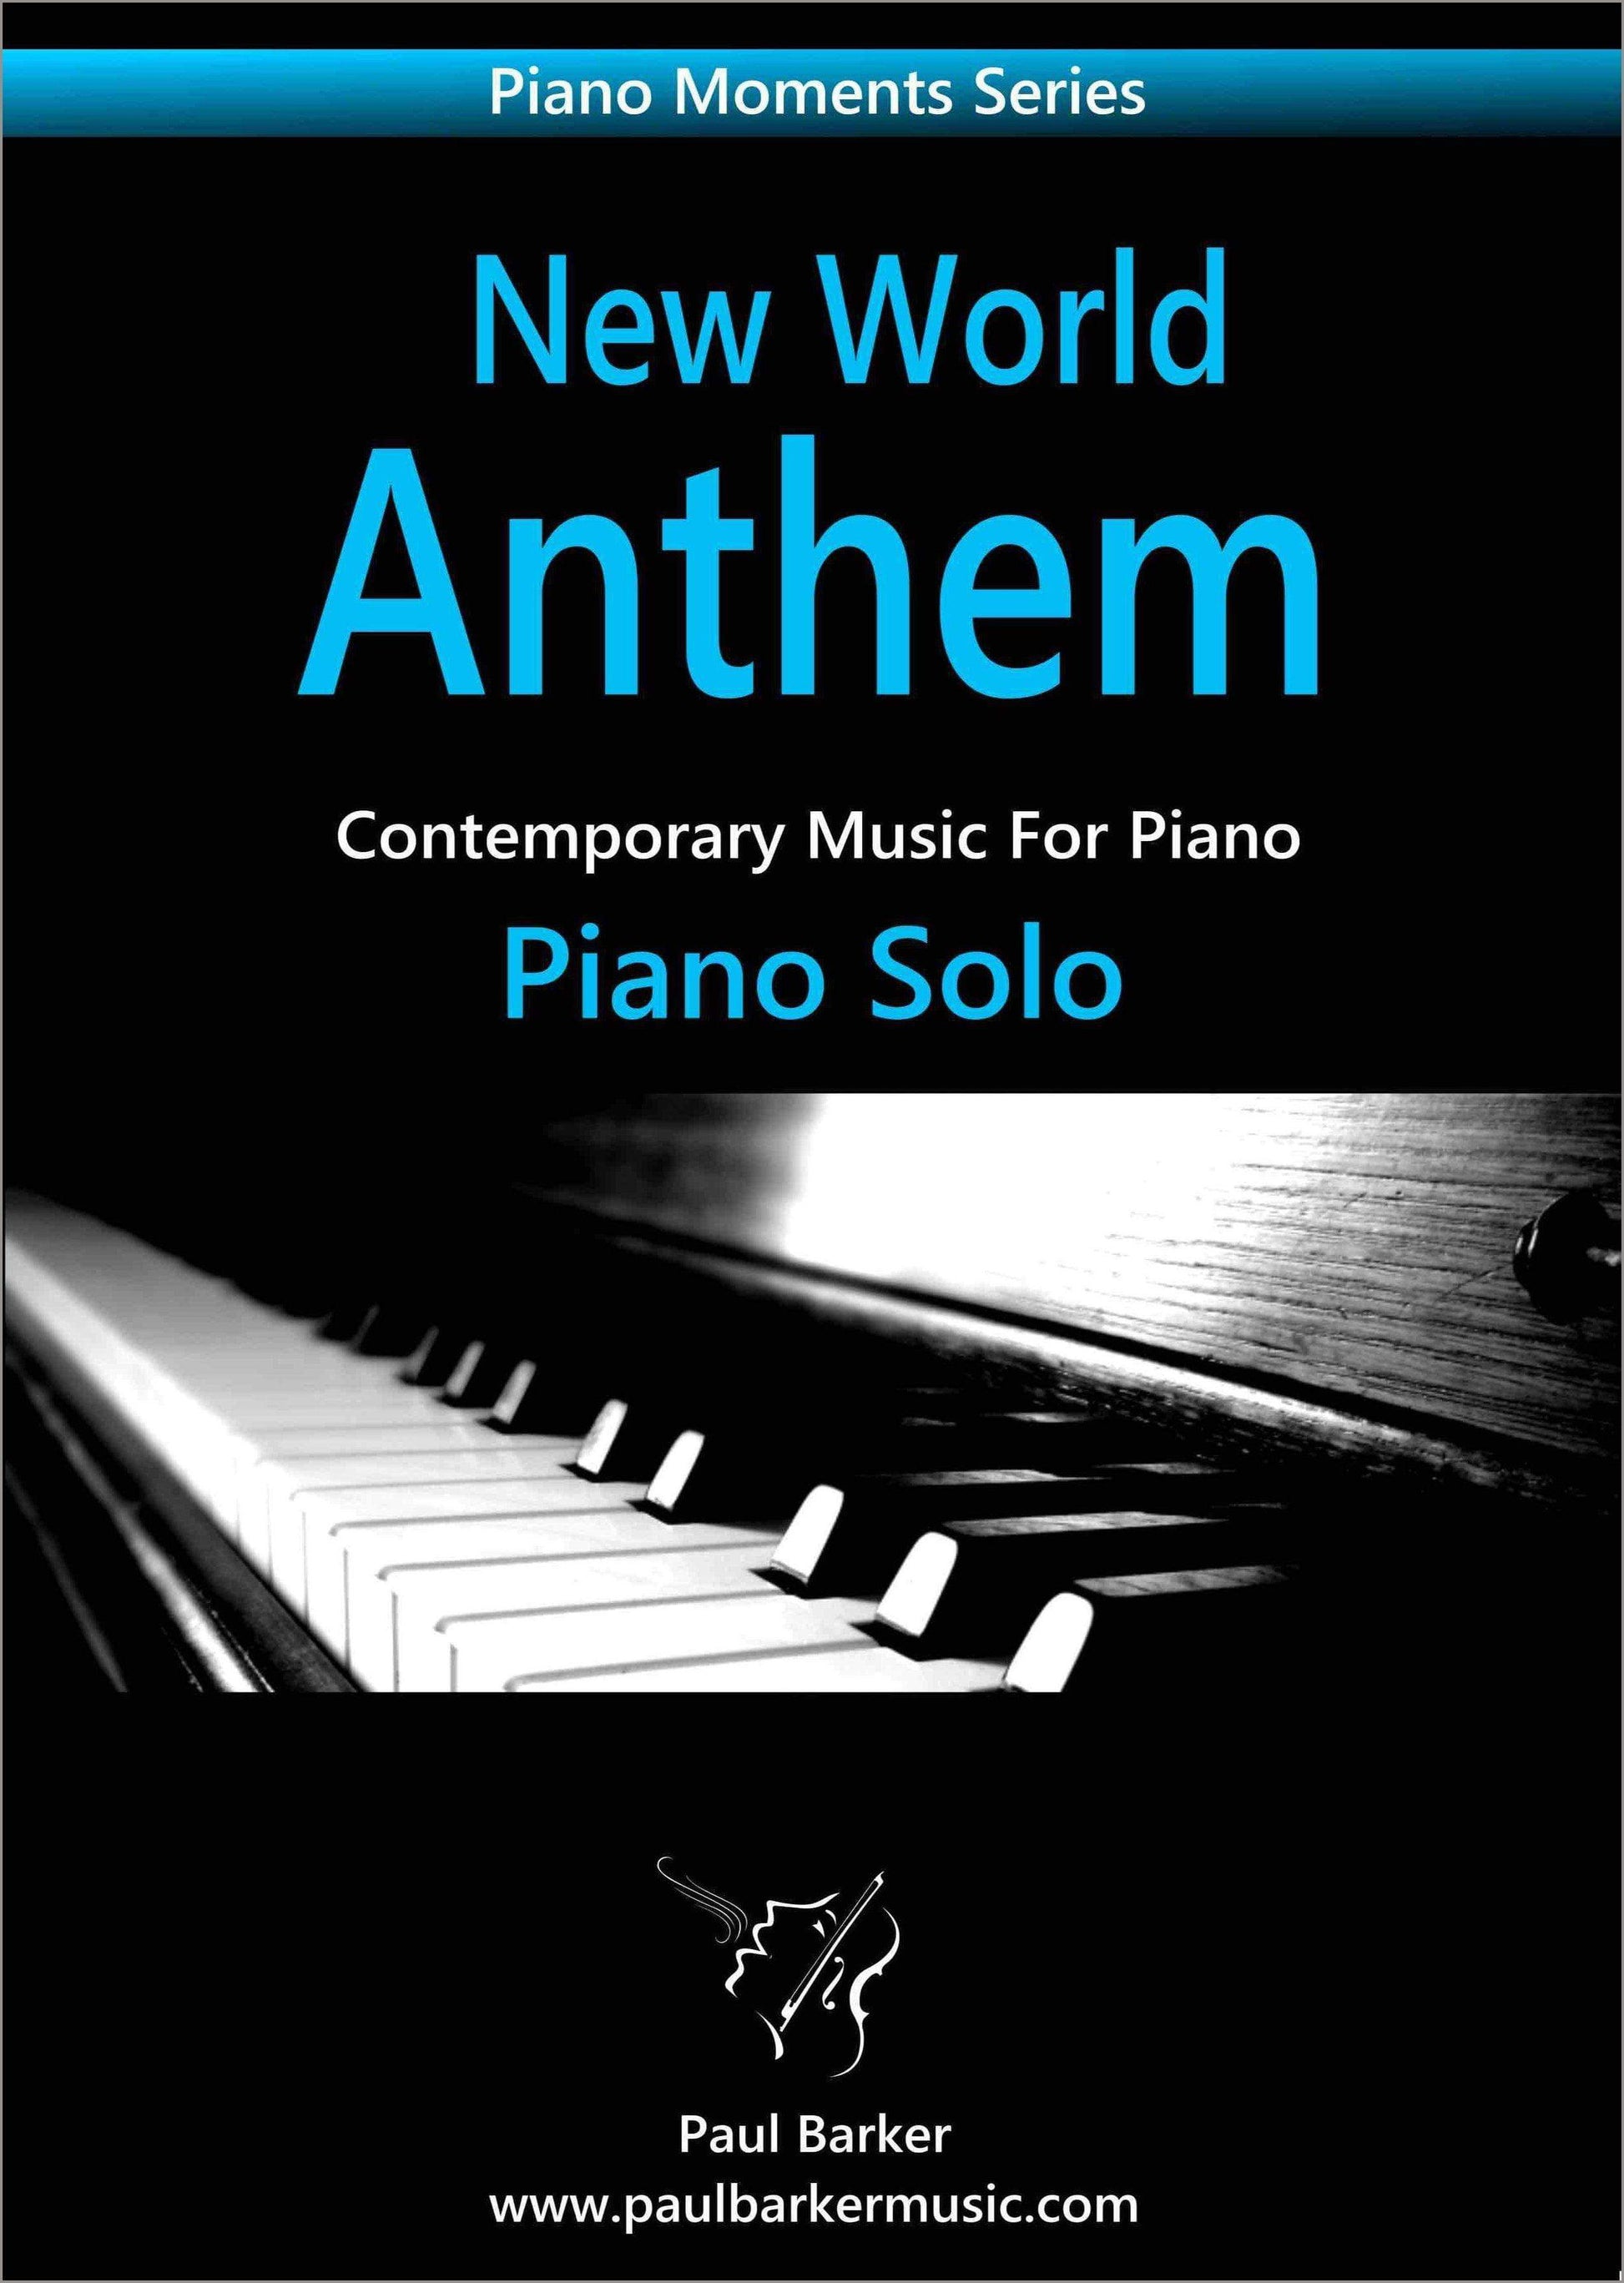 New World Anthem - Paul Barker Music 